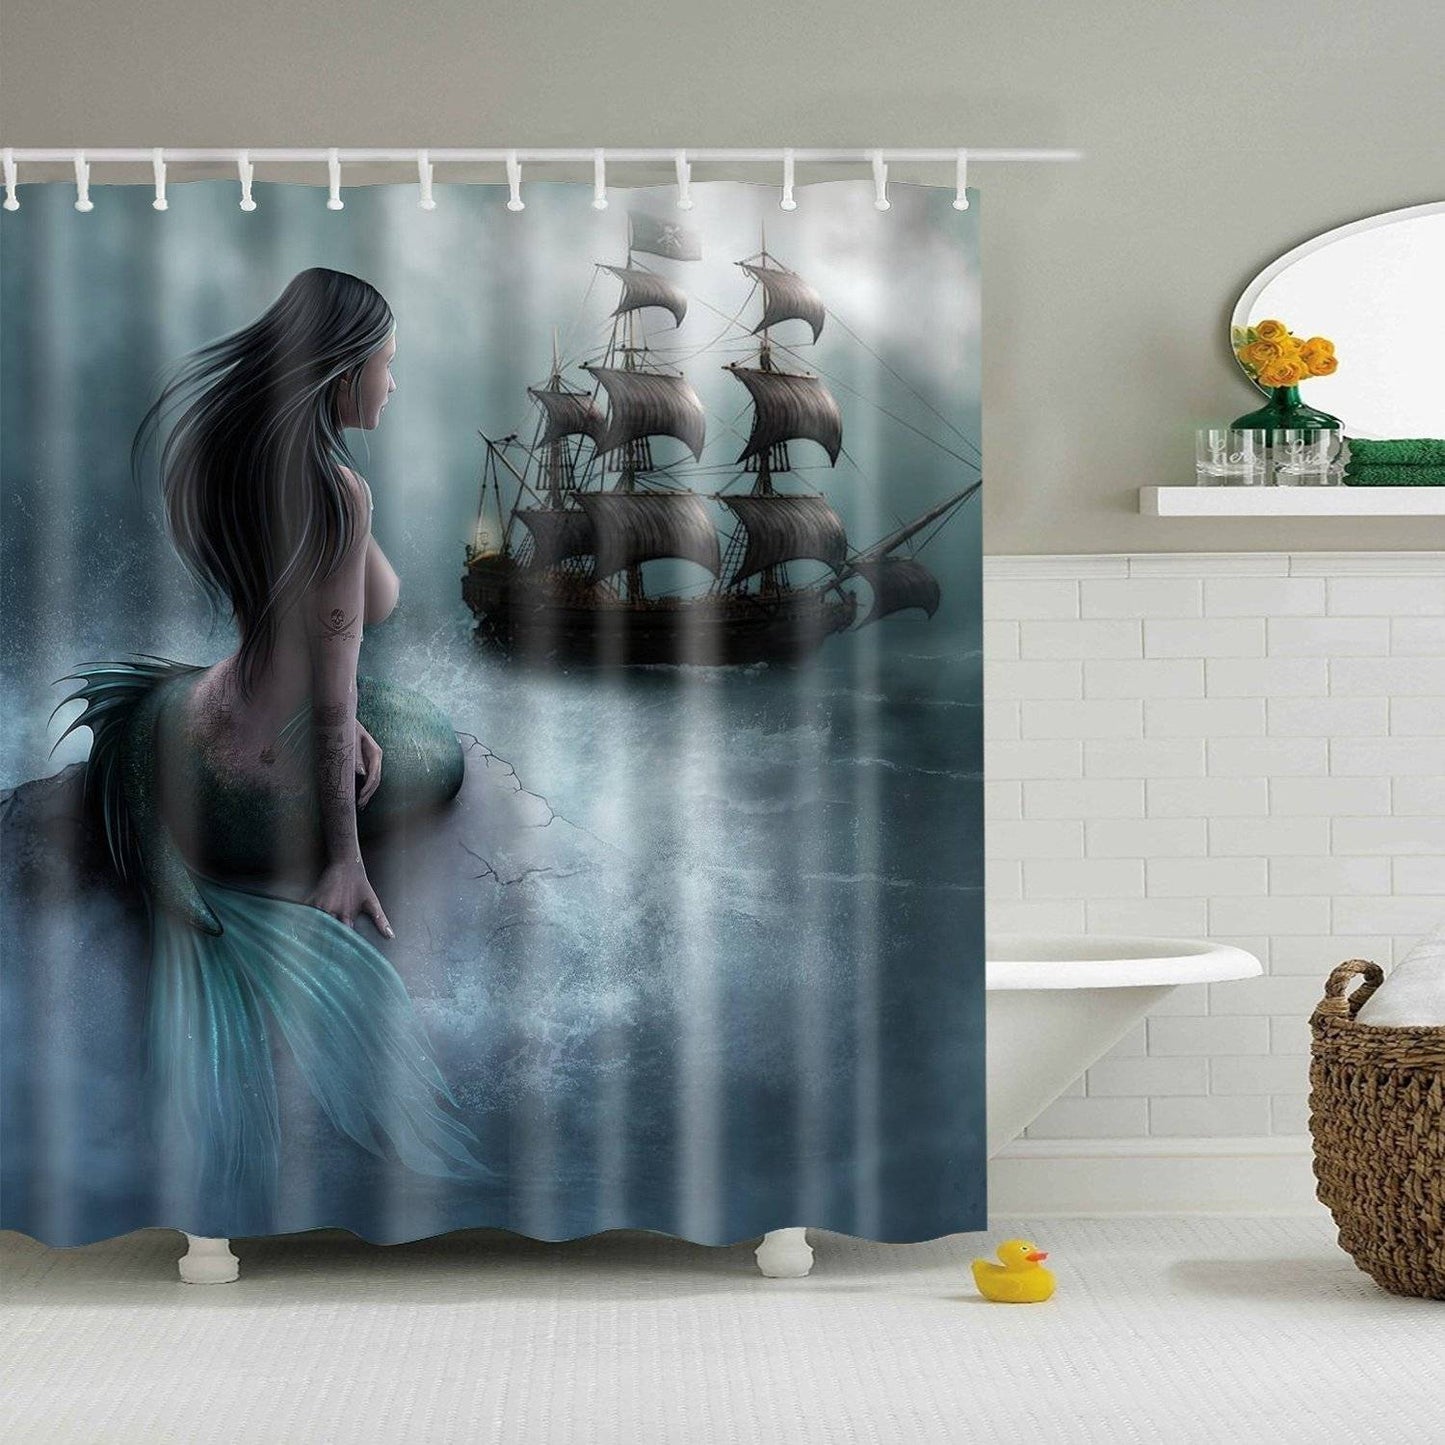 Medieval Age Sailboat Mermaid Pirate Ship Shower Curtain